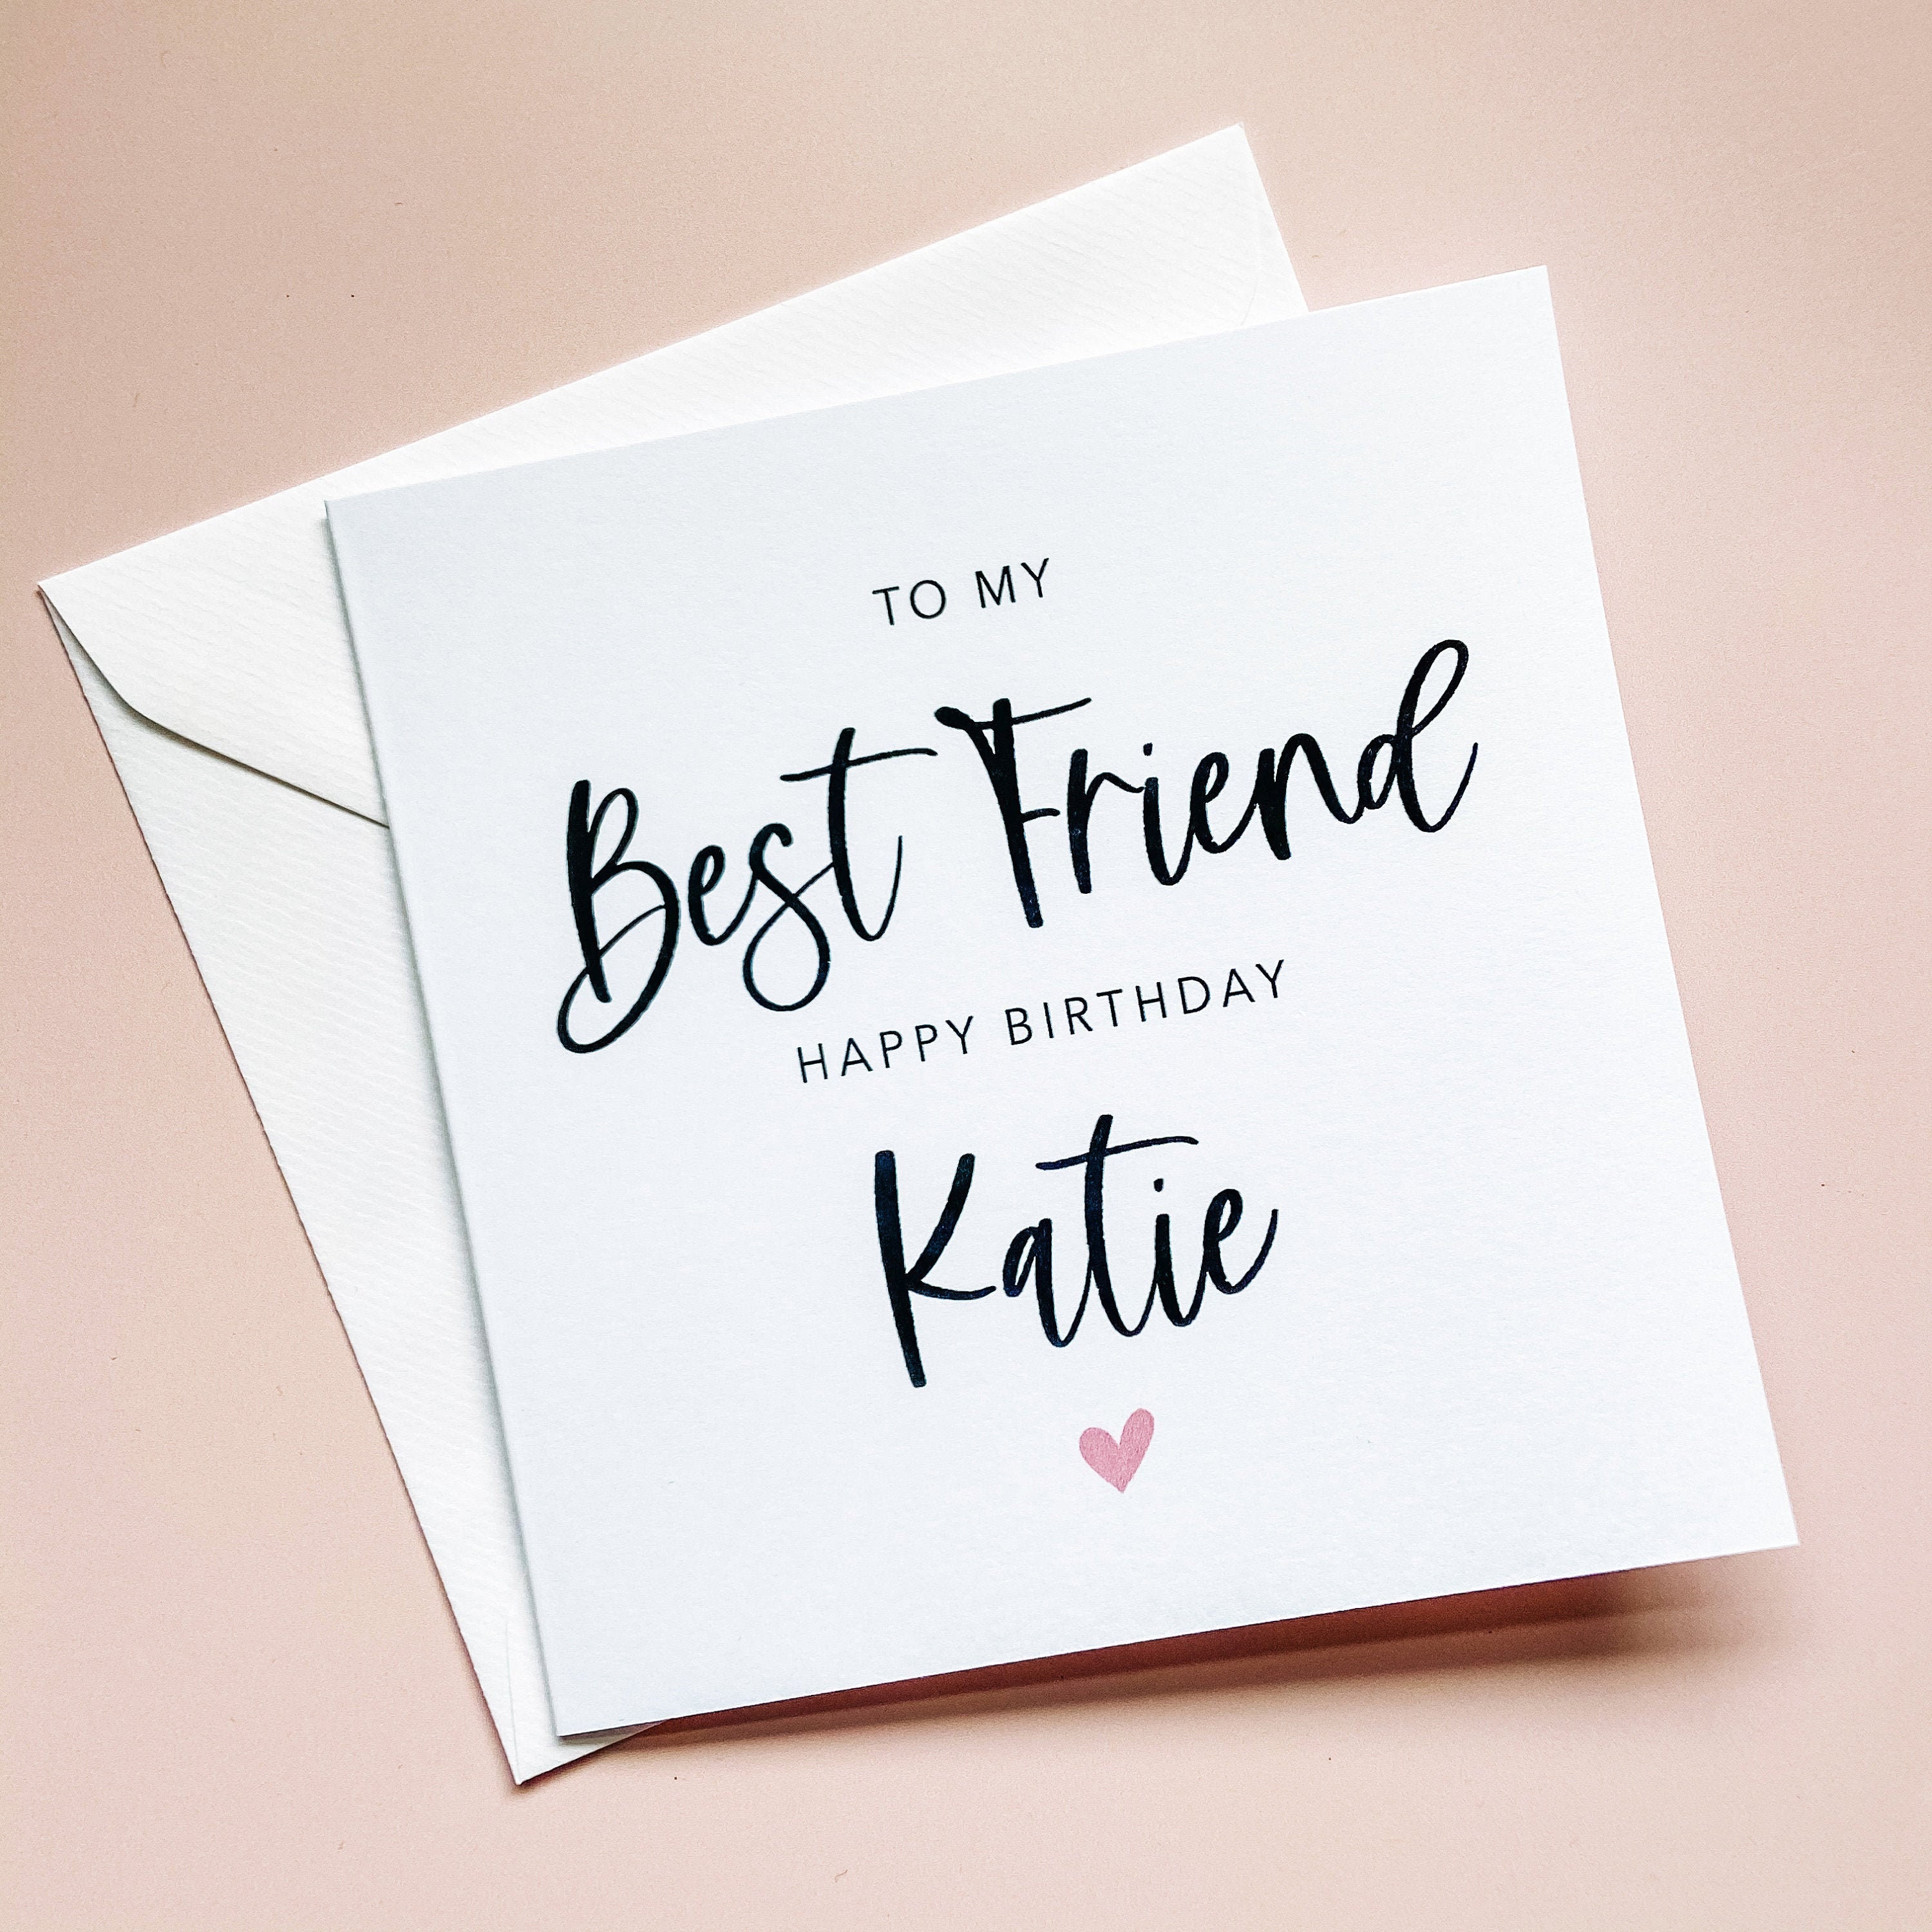 To My Best Friend Card Happy Birthday Card Best Friend | Etsy